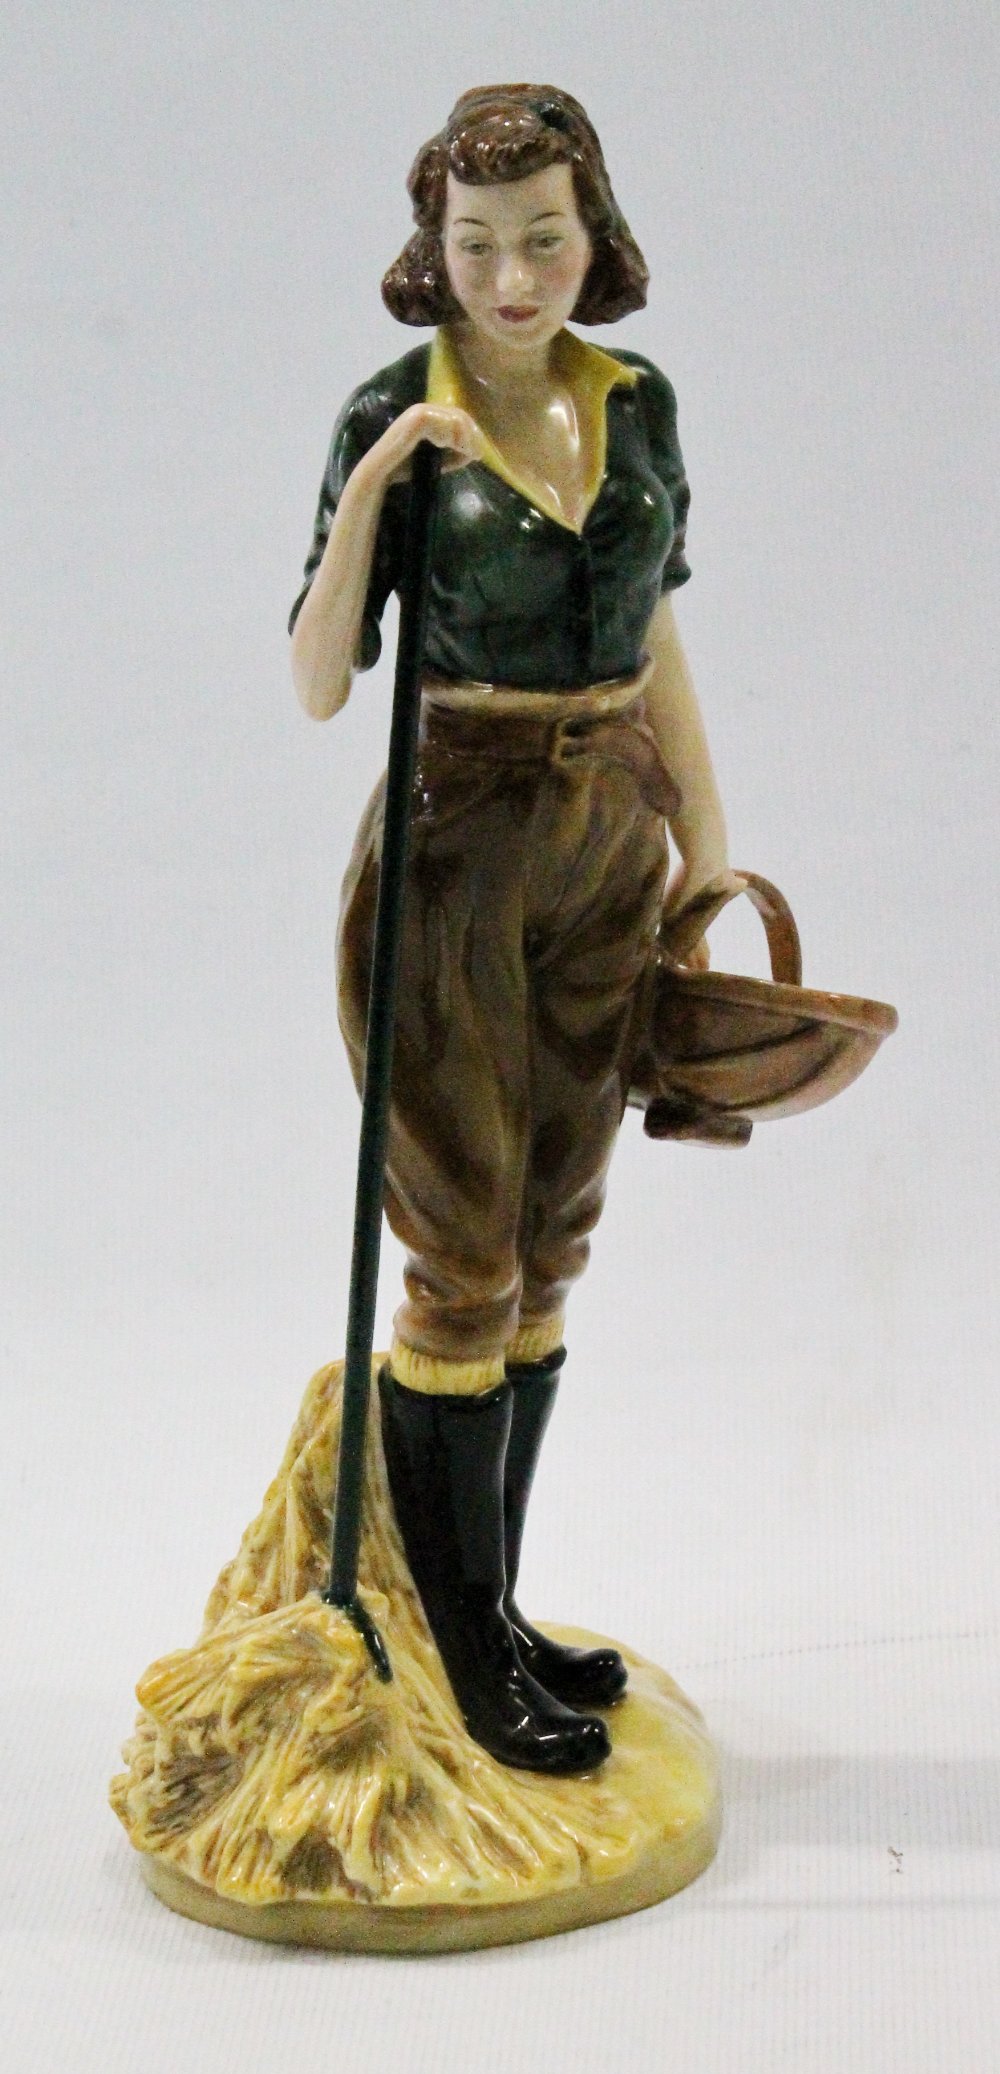 Royal Doulton figure, 'The Land Girl'.